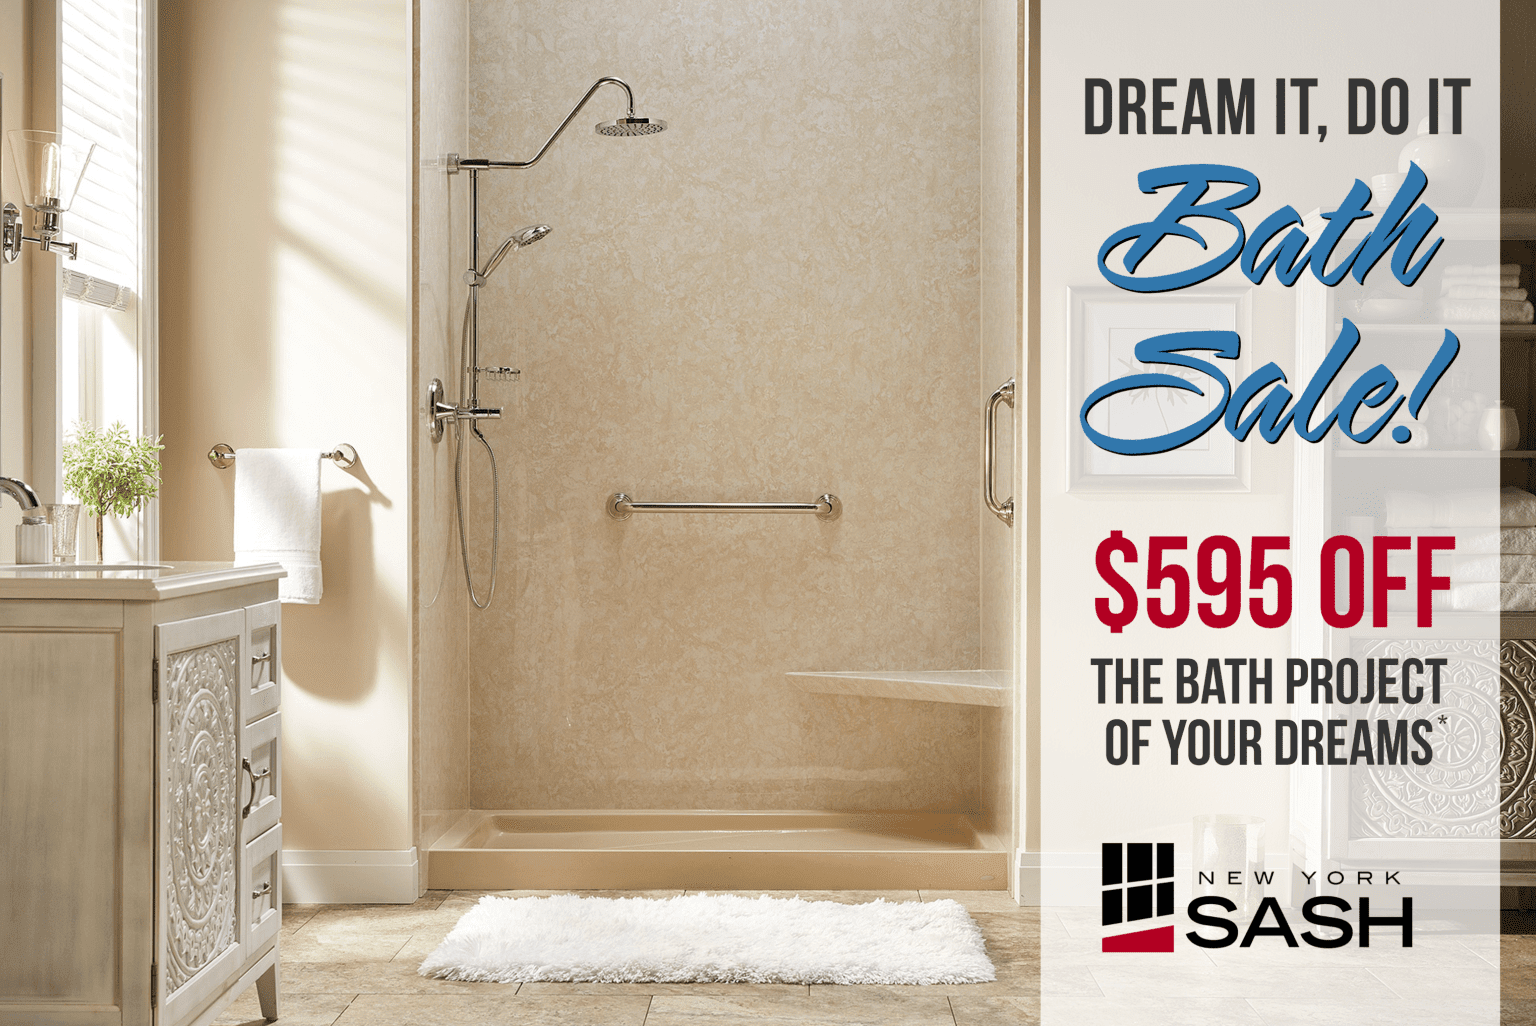 2020 dream it bath sale